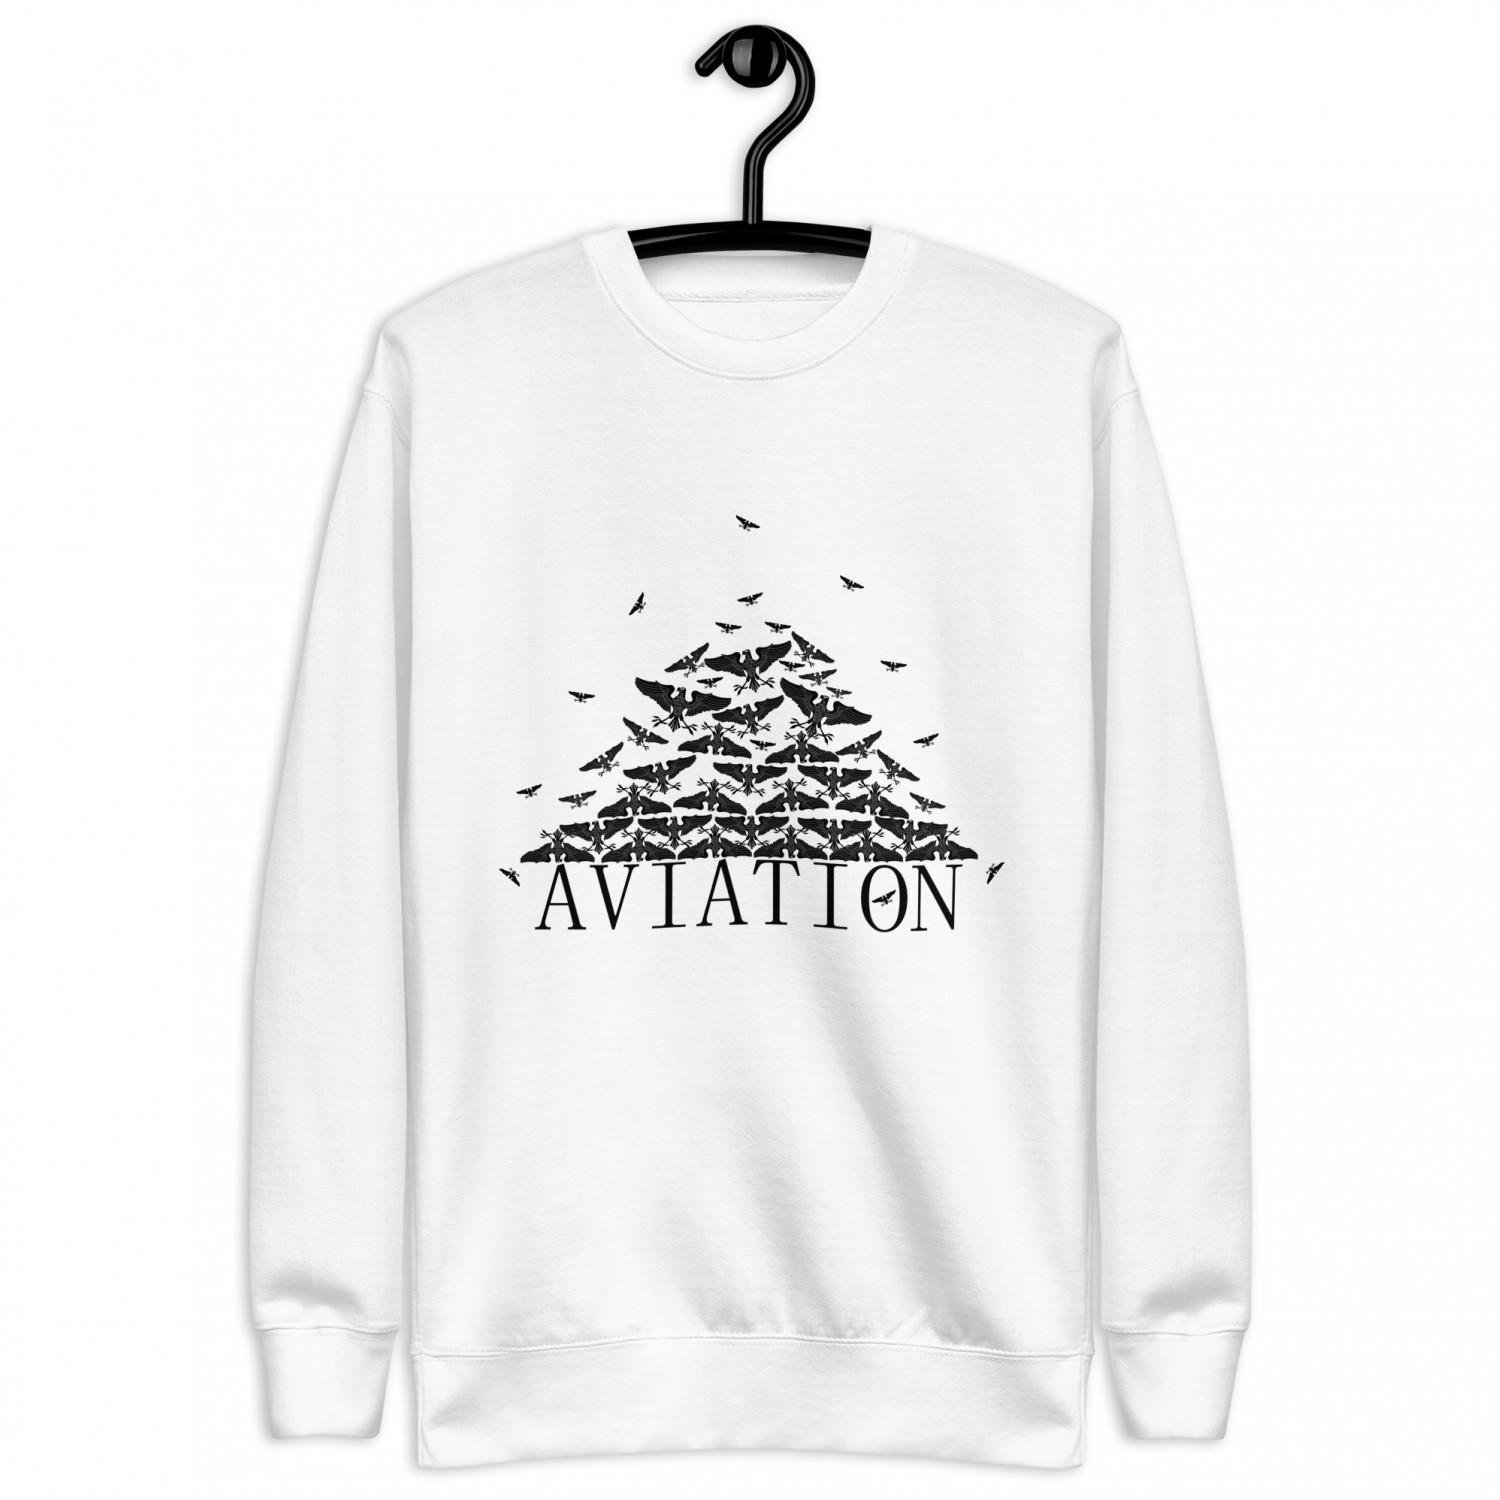 Buy a warm "Aviation" sweatshirt